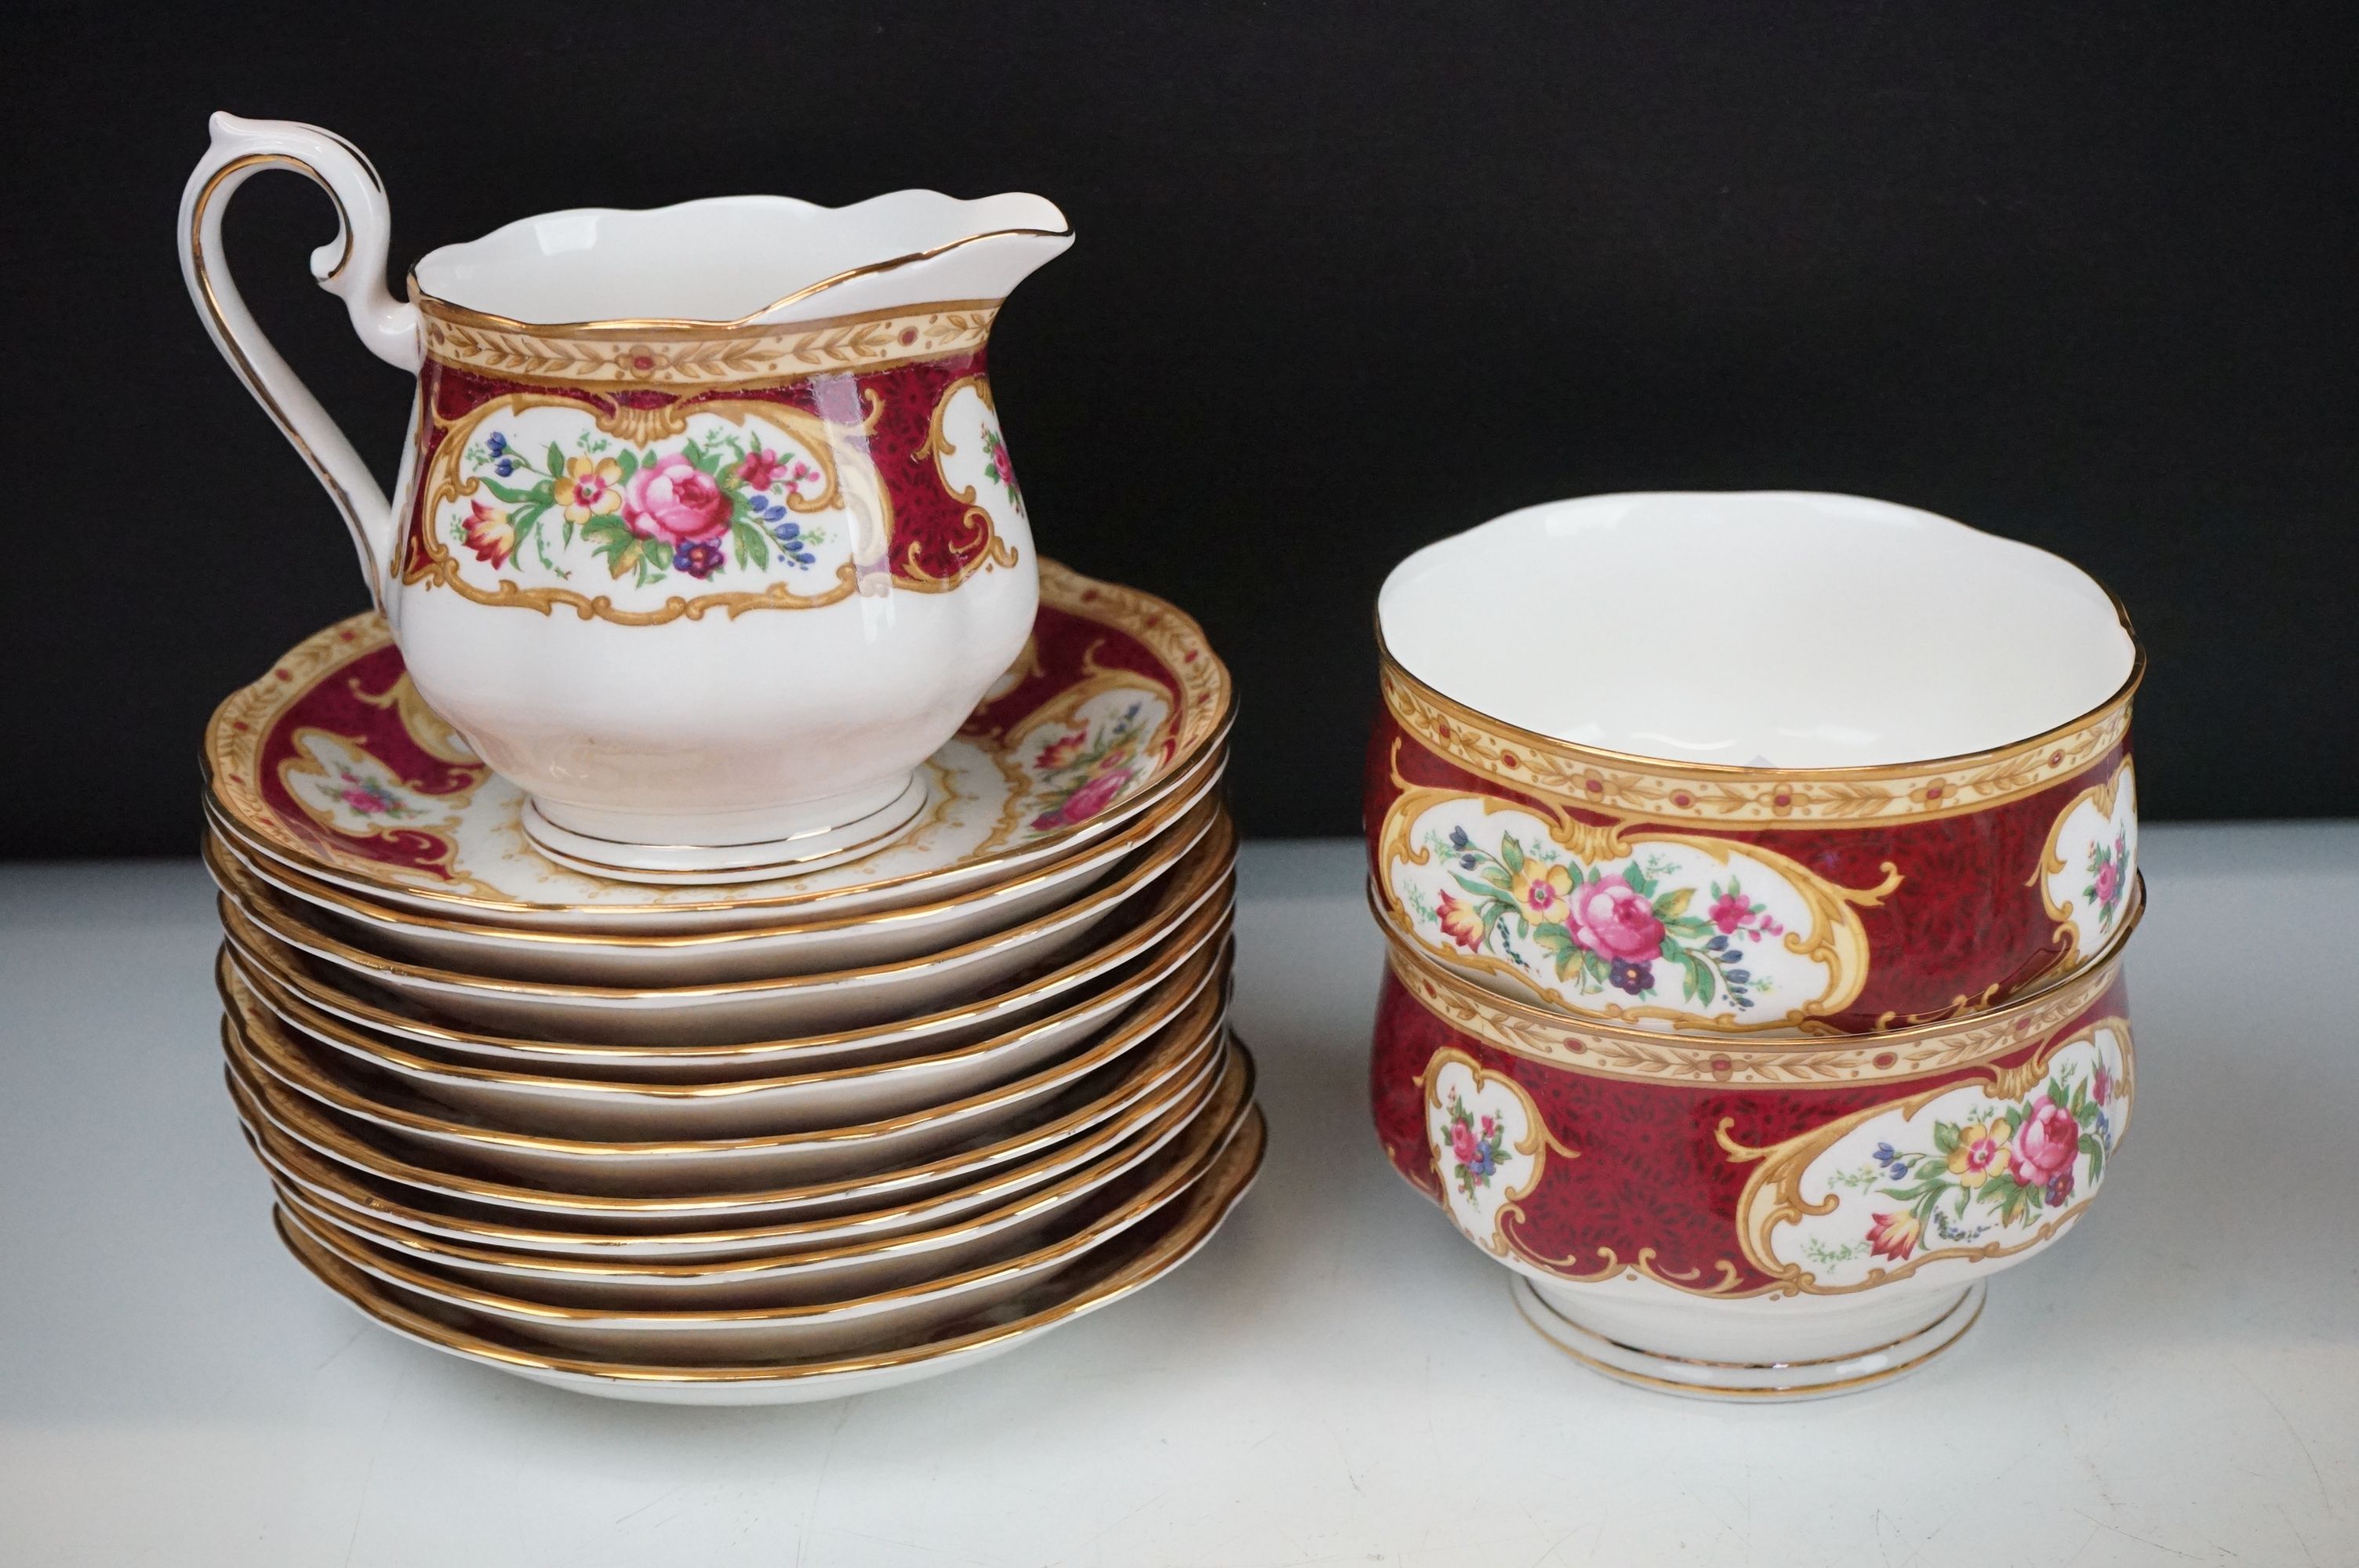 Royal Albert Lady Hamilton tea service consisting of 12 tea cups, 11 saucers, two creamer jugs, salt - Image 11 of 11